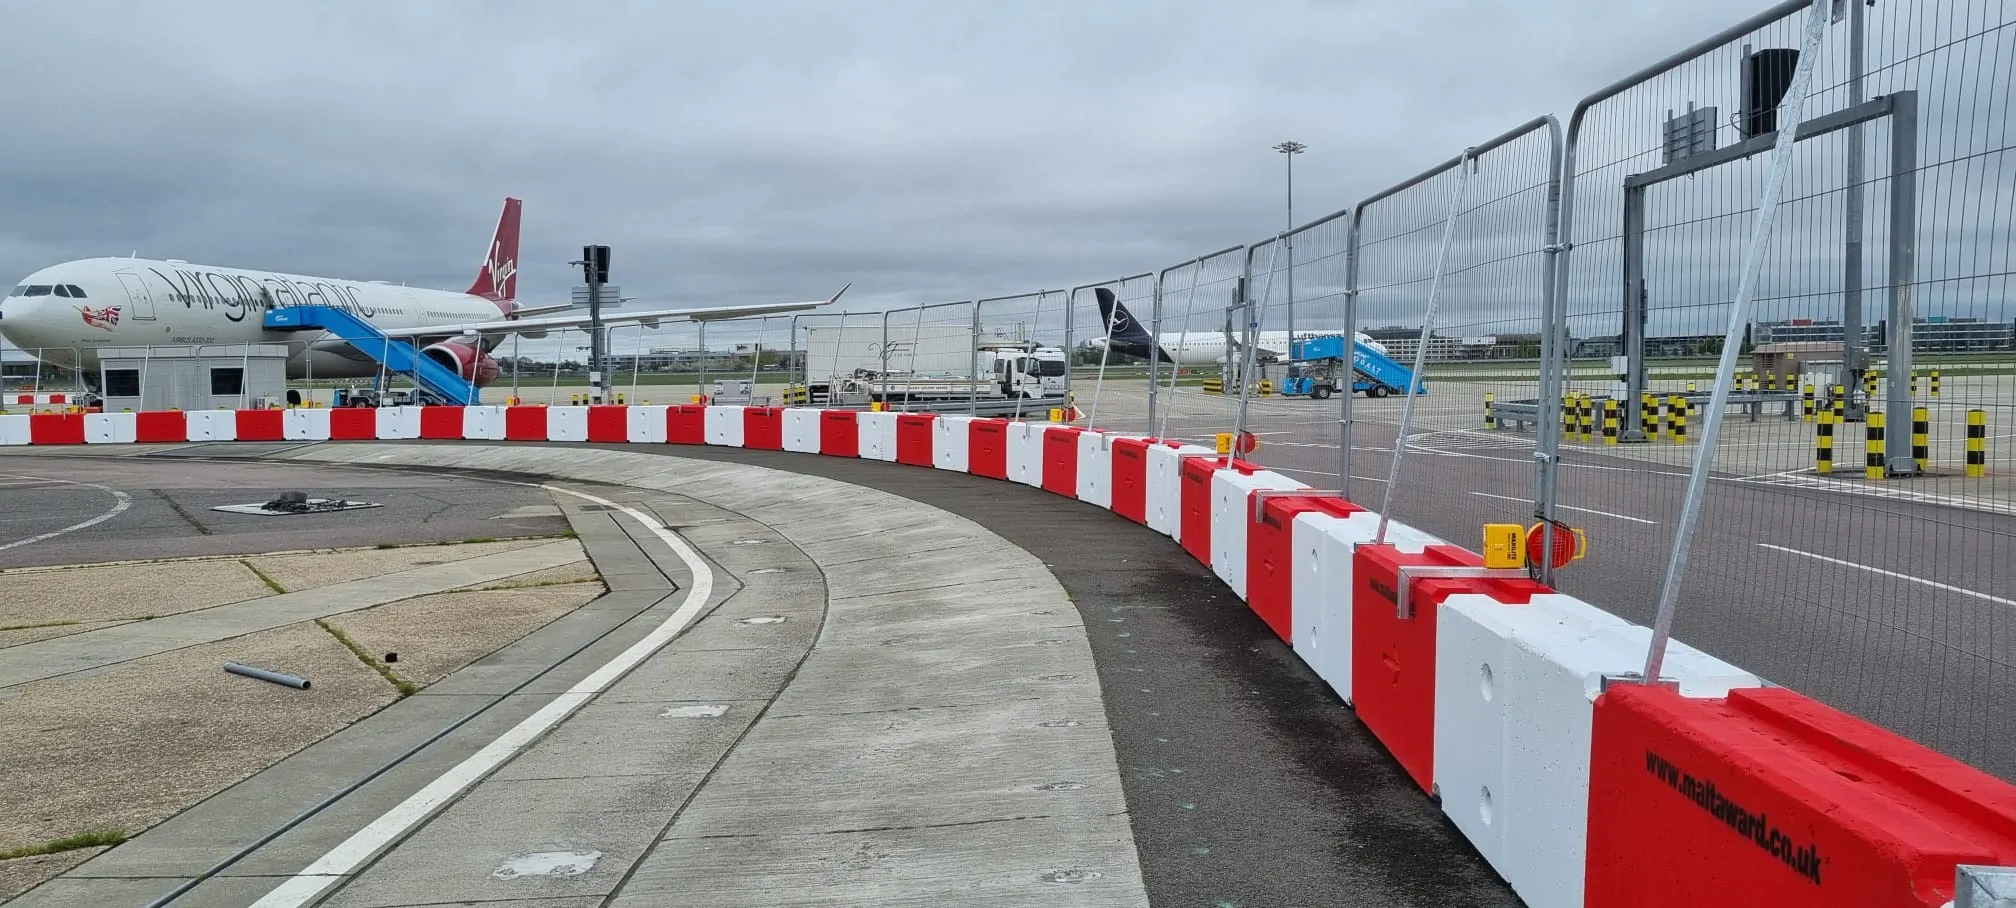 heathrow airport concrete barriers